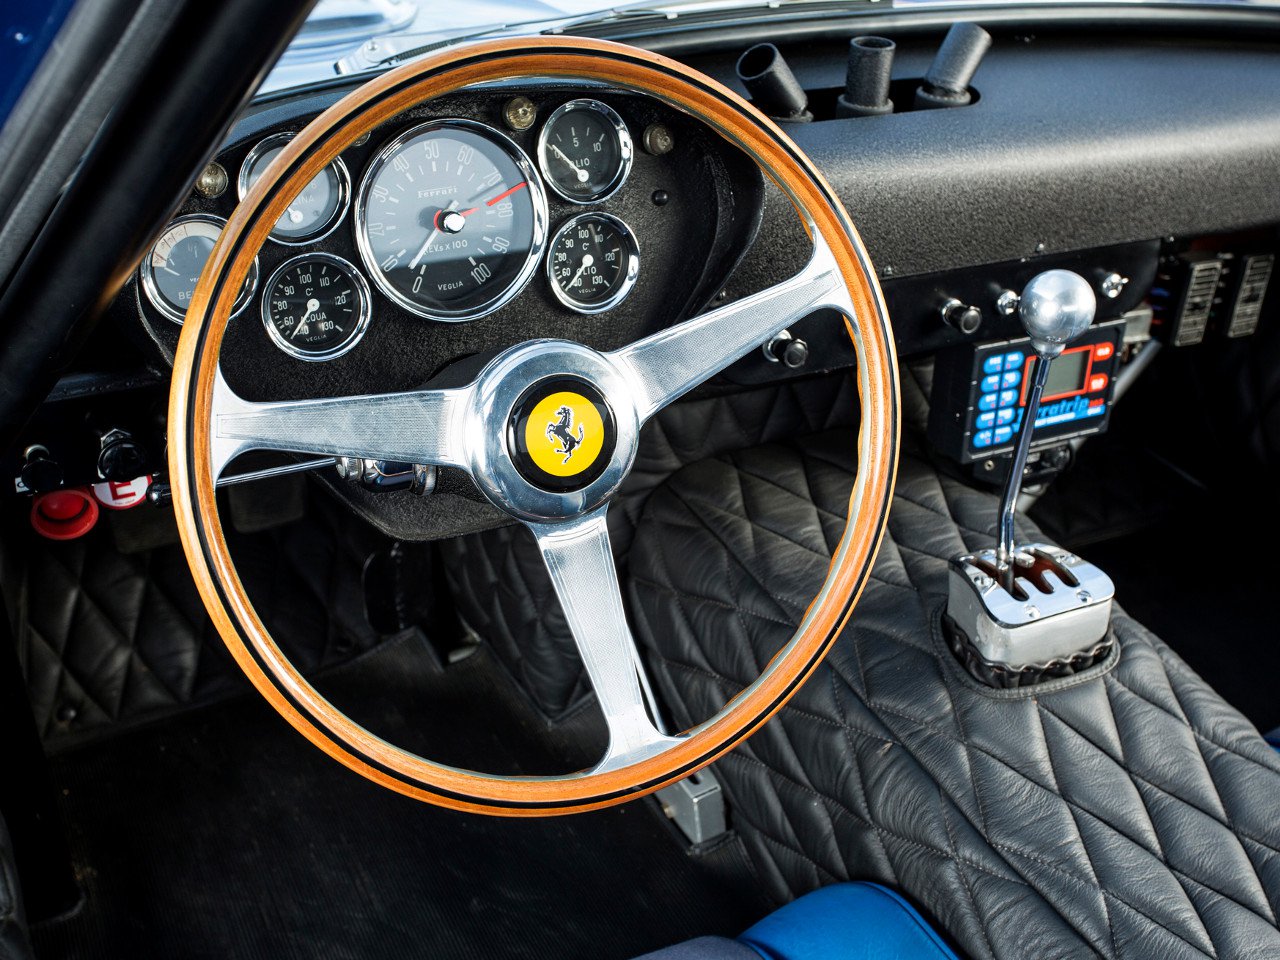 1962 Ferrari 250 GTO S  N 3387GT продается за $ 5,64 млн